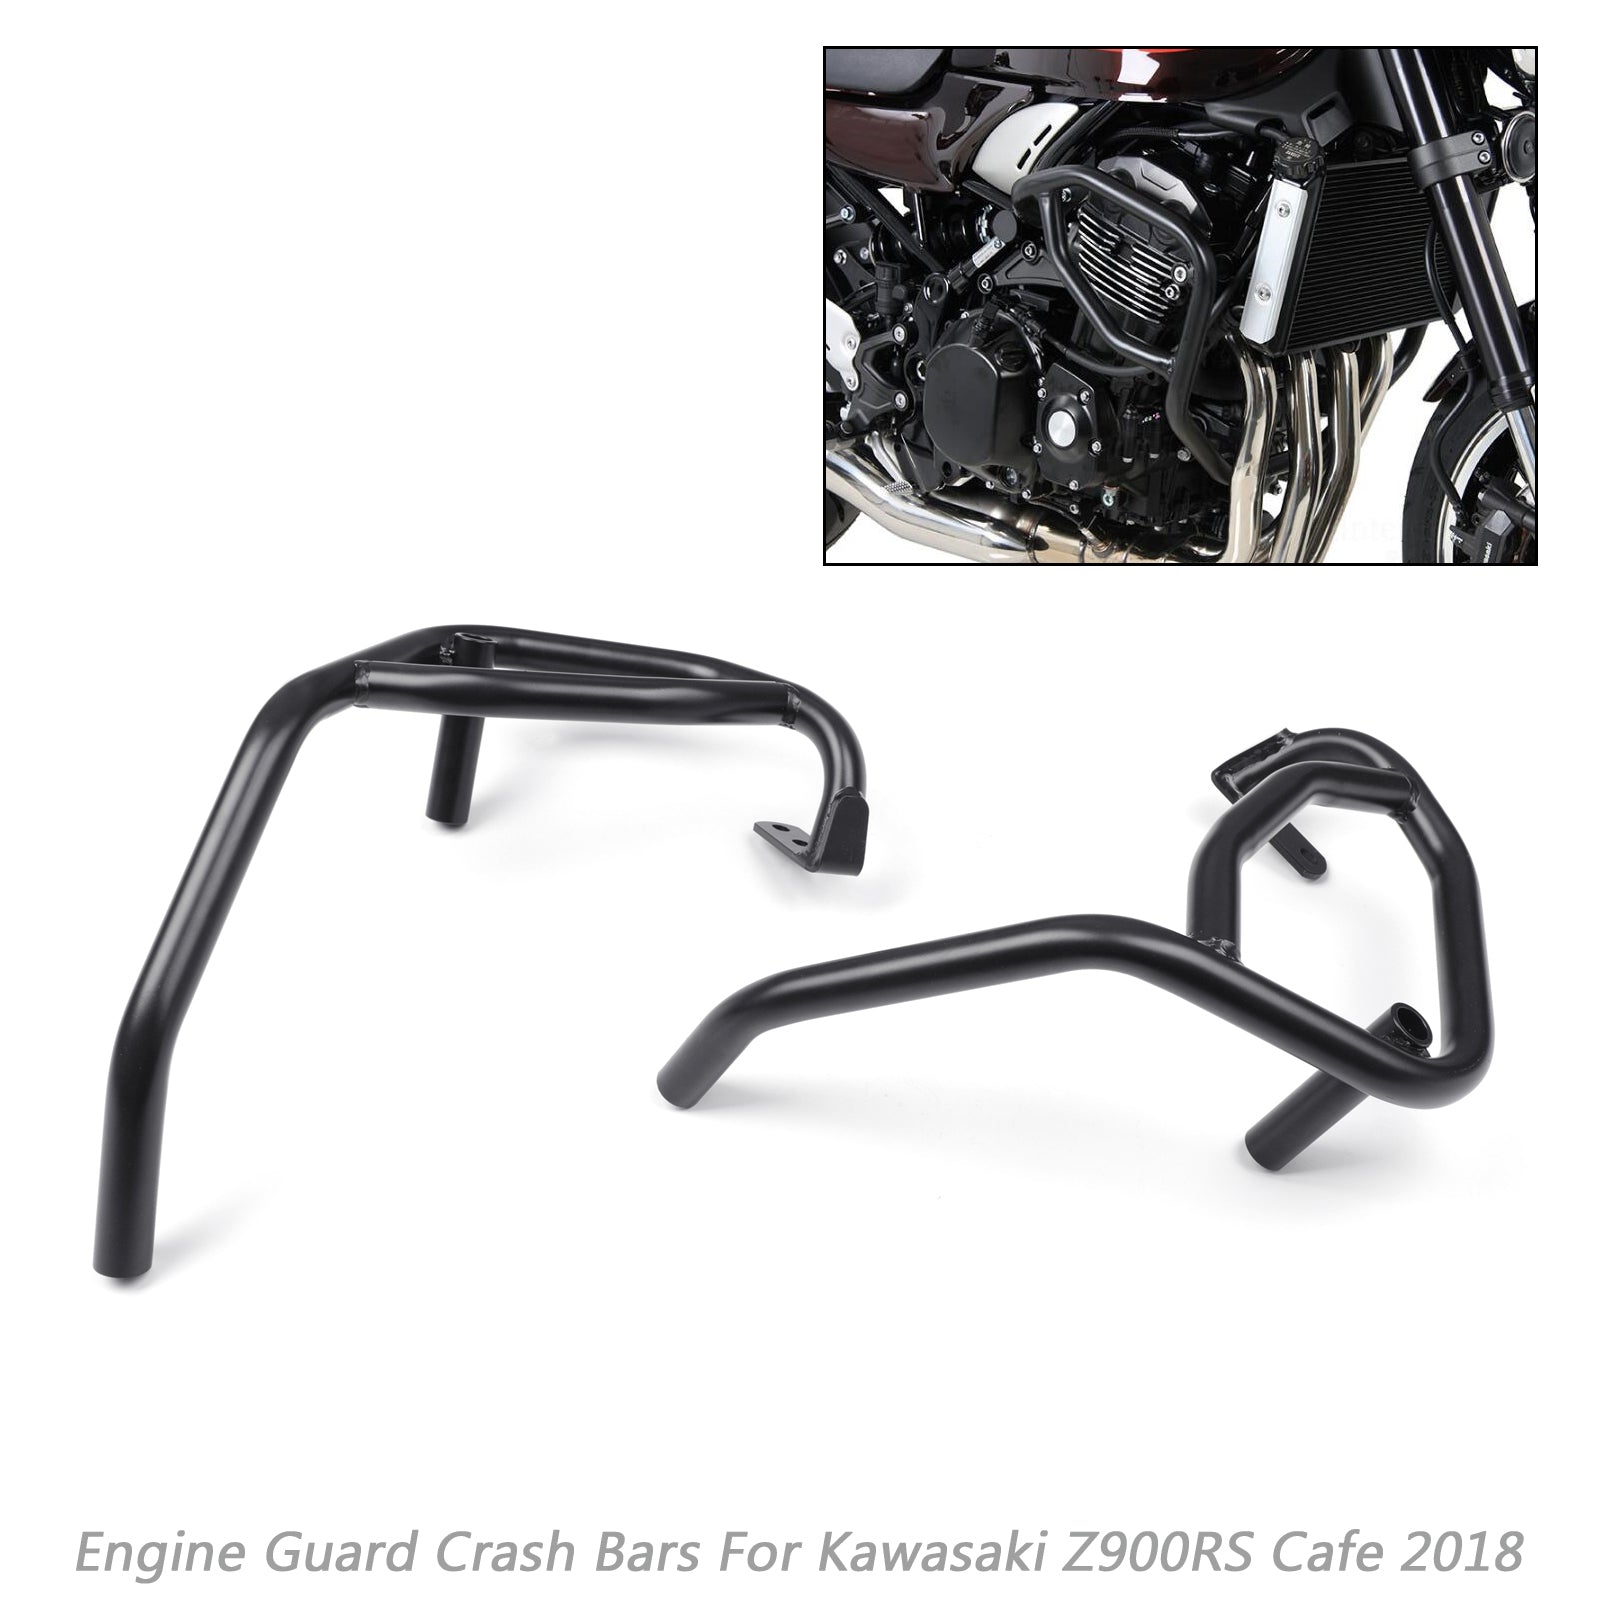 Black Highway Motorcycle Engine Guard Crash Bars For Kawasaki Z900RS Cafe 2018